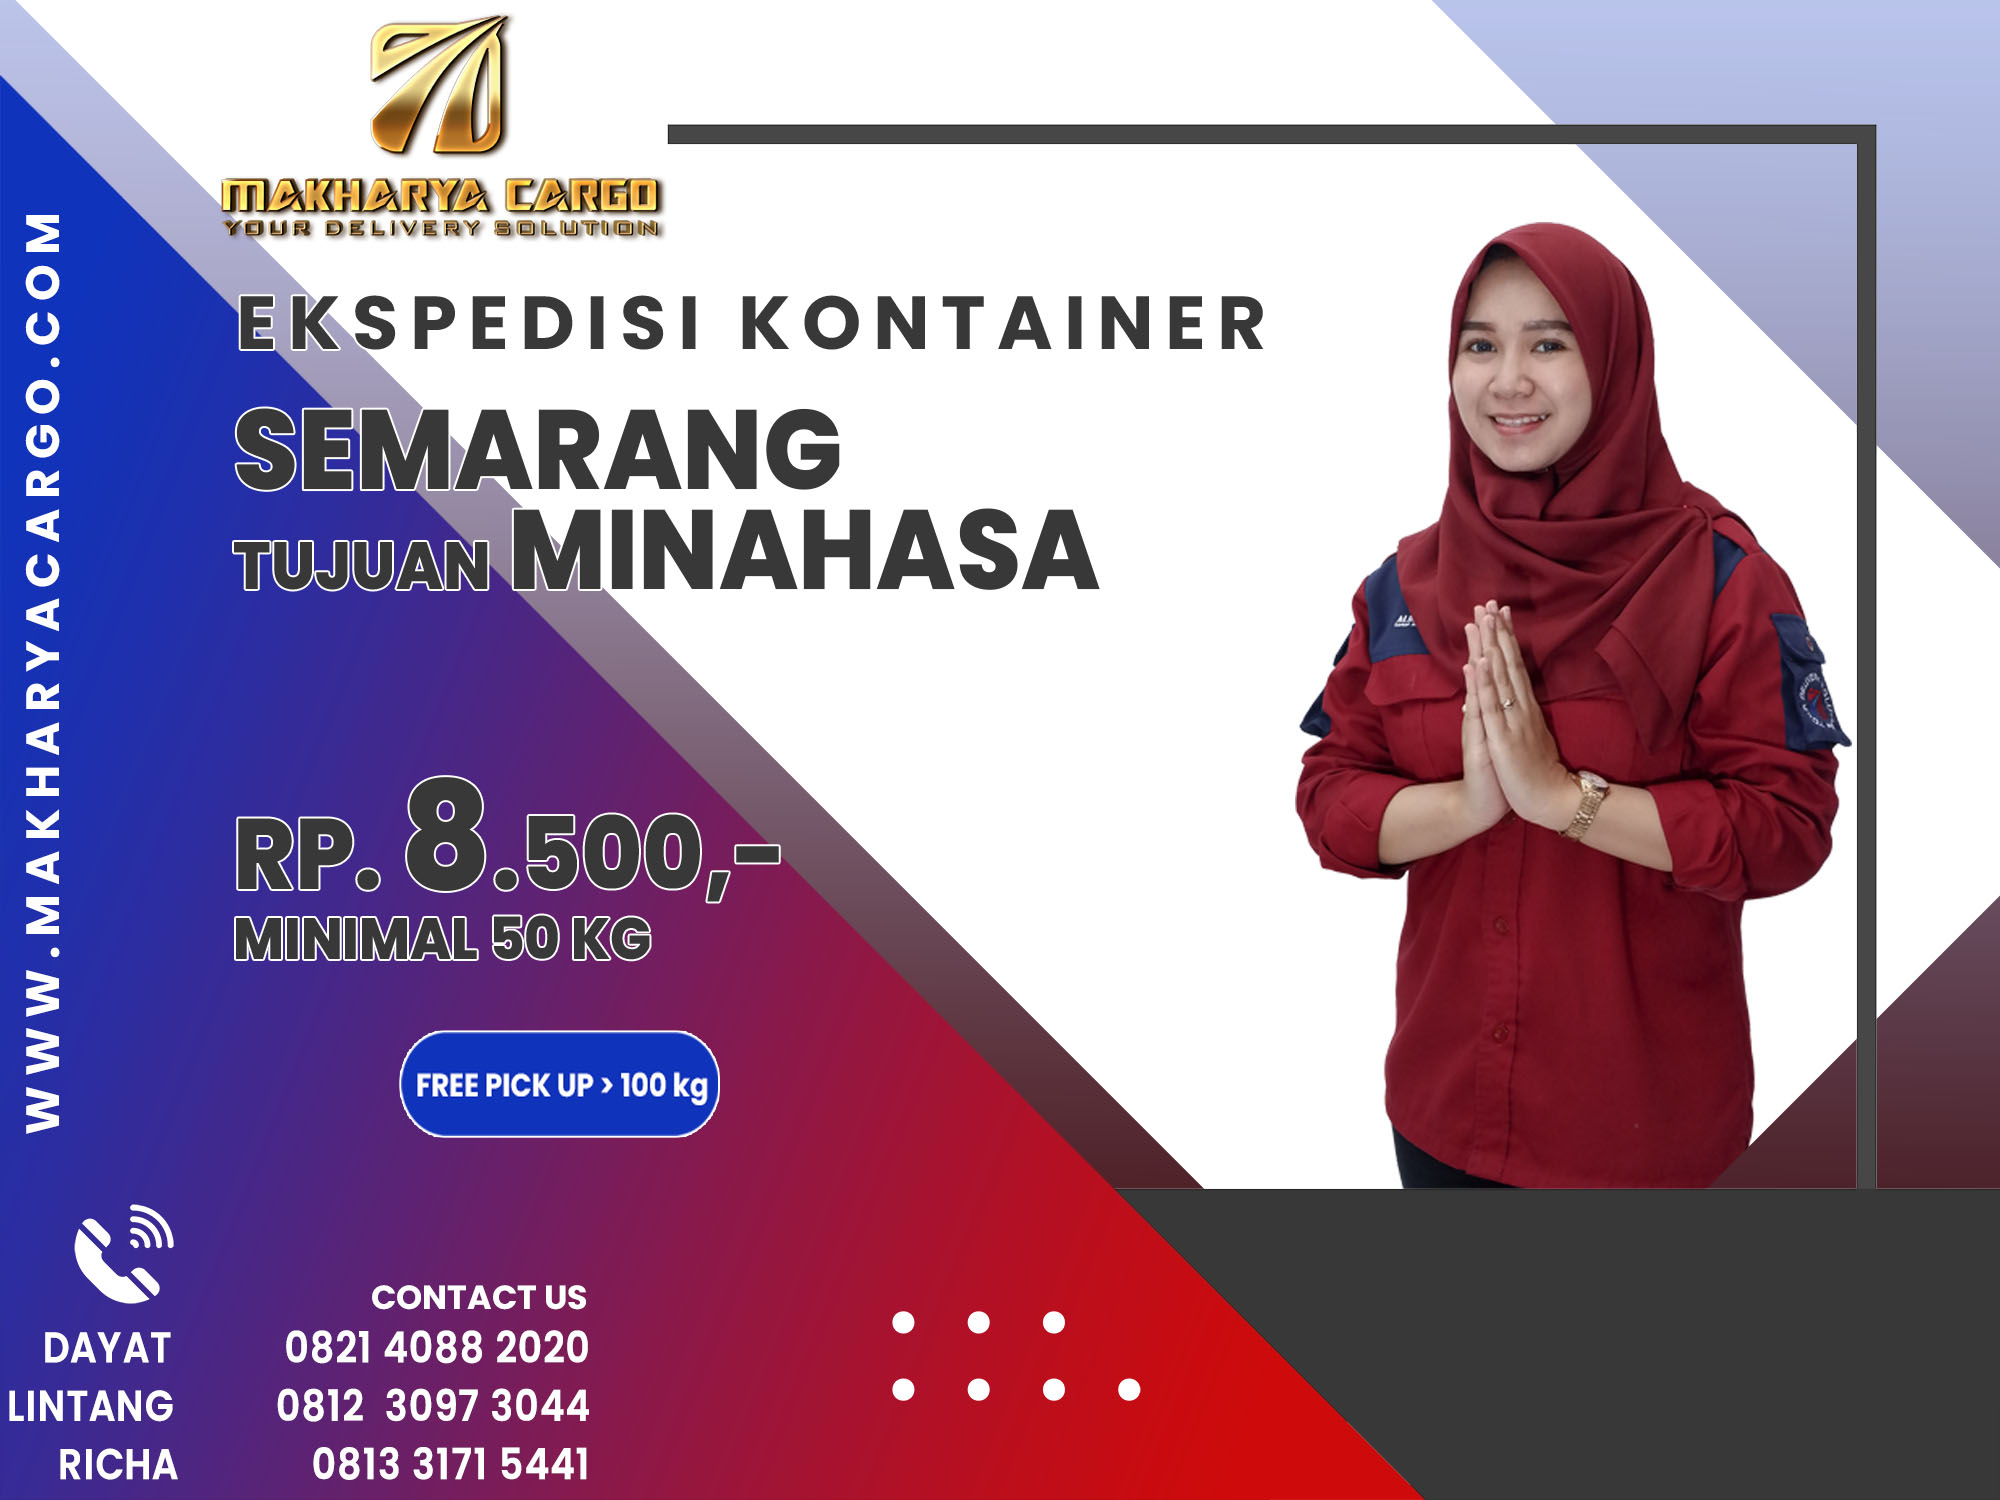 Ekspedisi Kontainer Semarang Minahasa